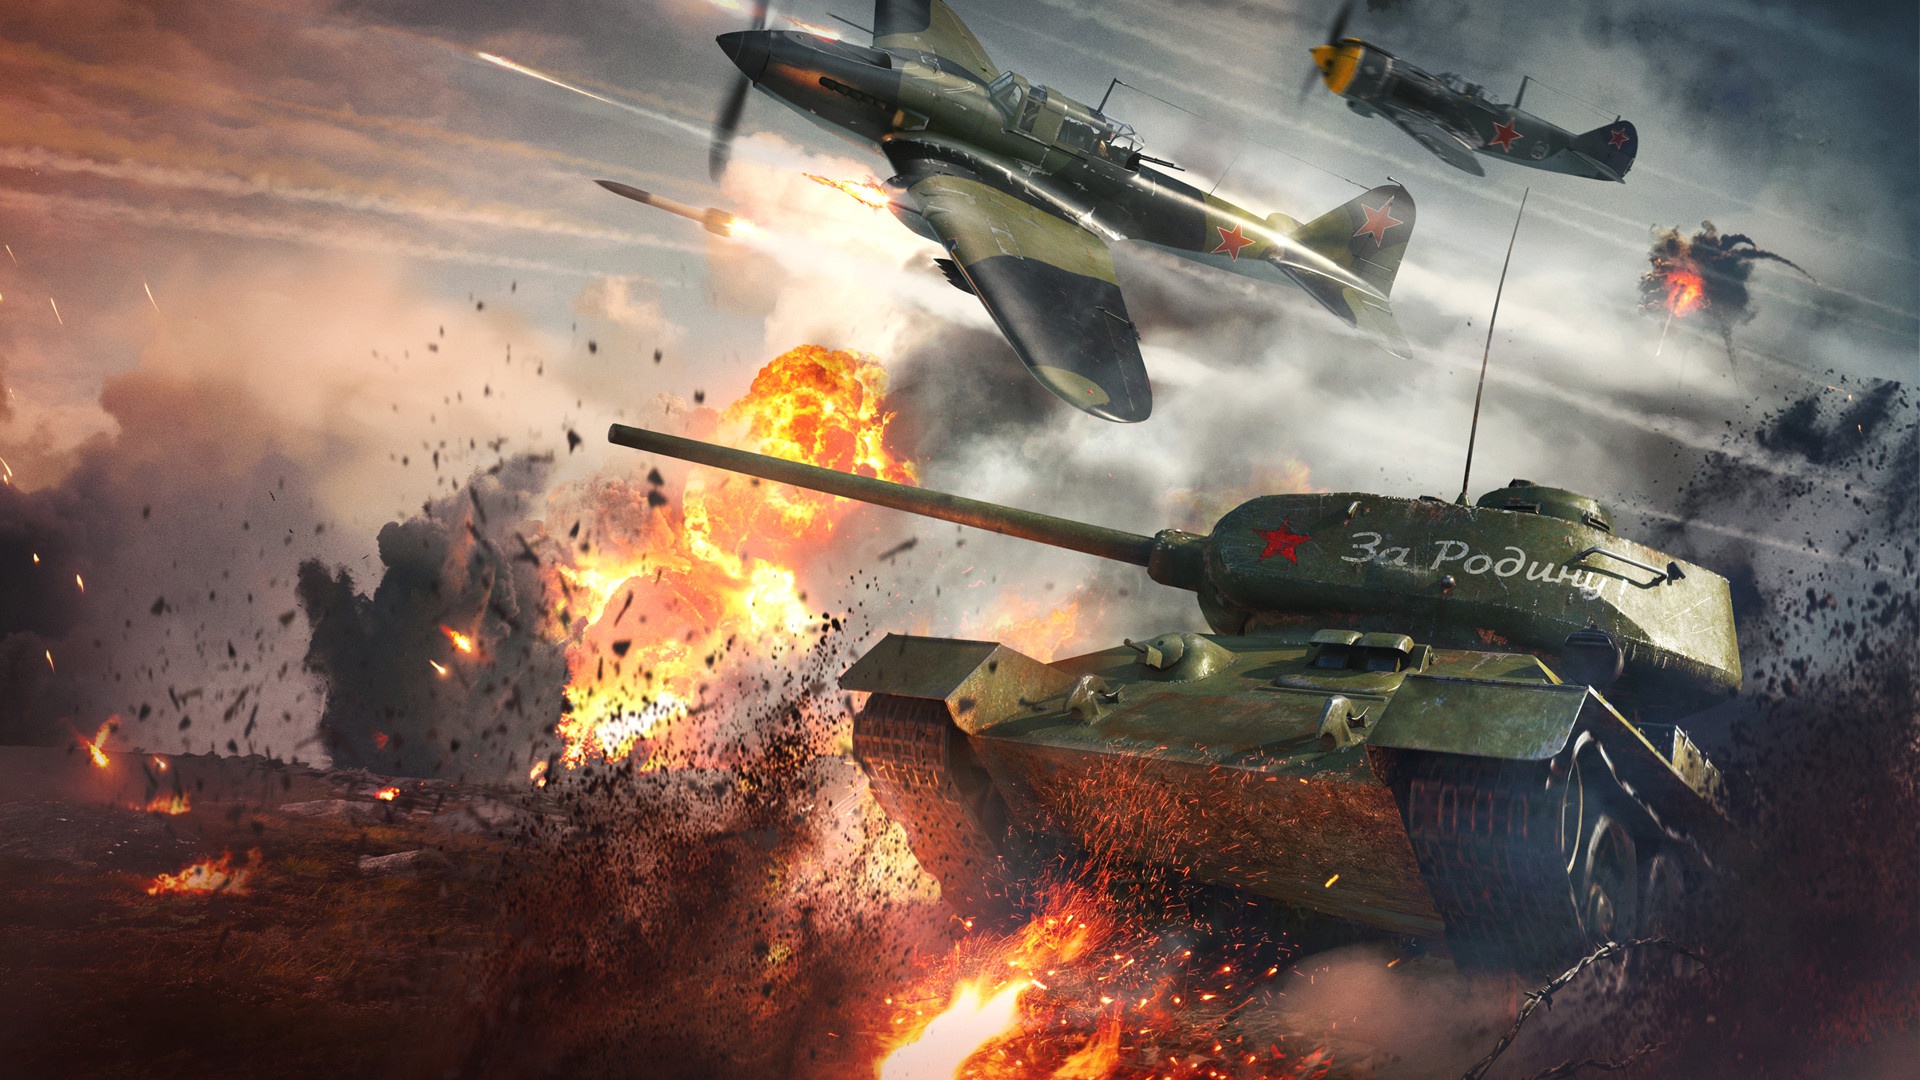 General 1920x1080 video games video game art digital art War Thunder military military vehicle military aircraft war battle airplane aircraft tank explosion T-34